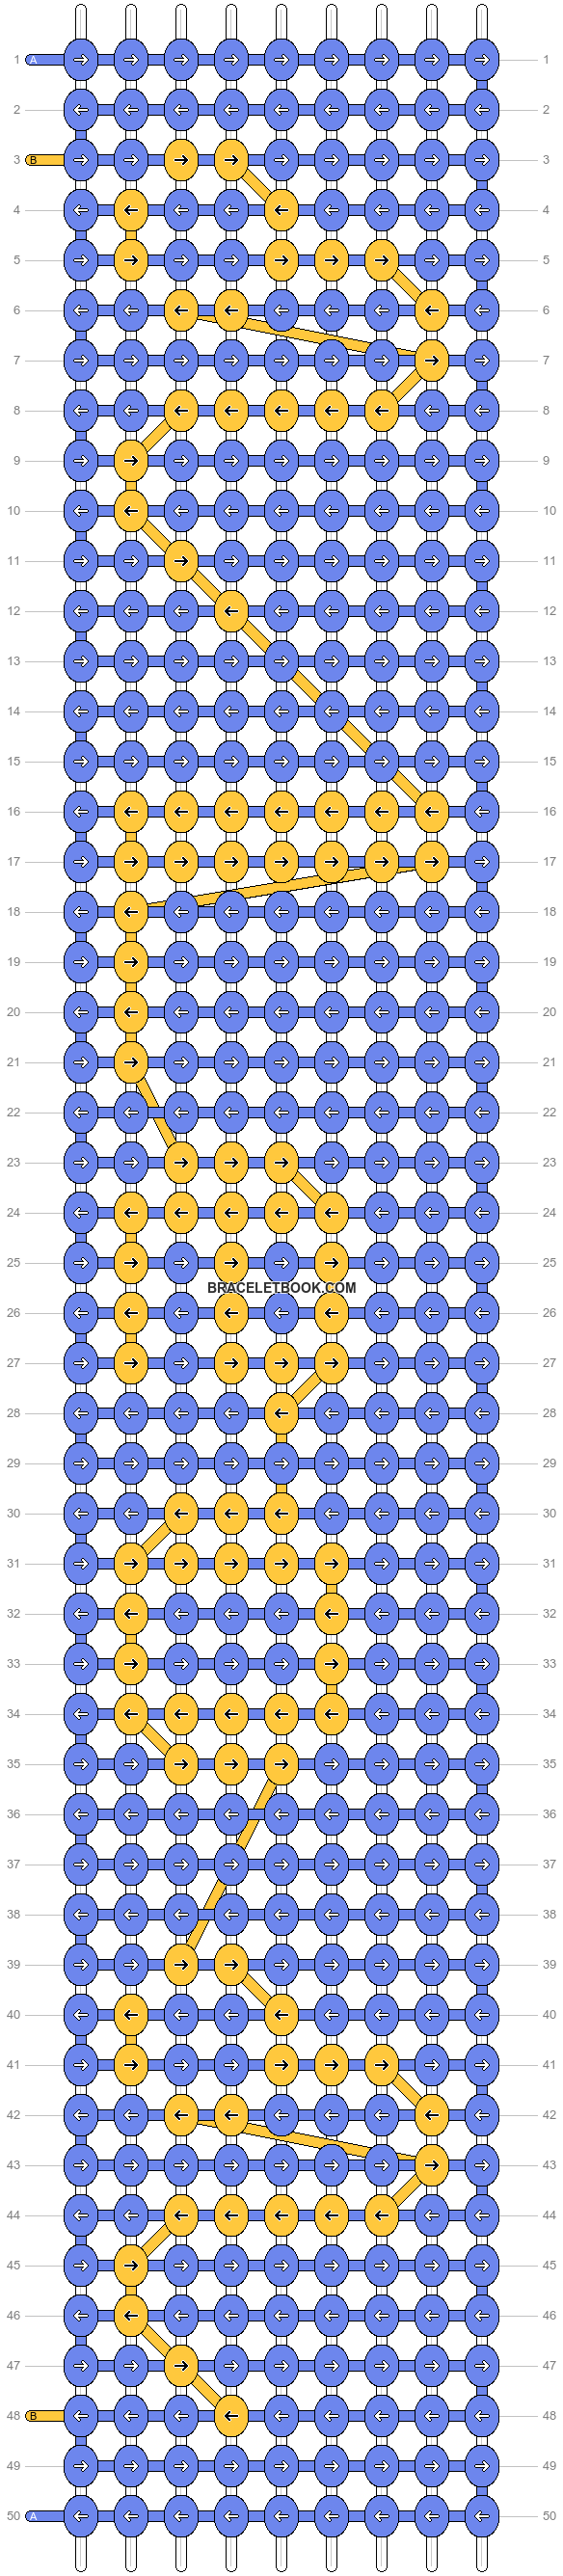 Alpha pattern #6174 variation #21217 pattern